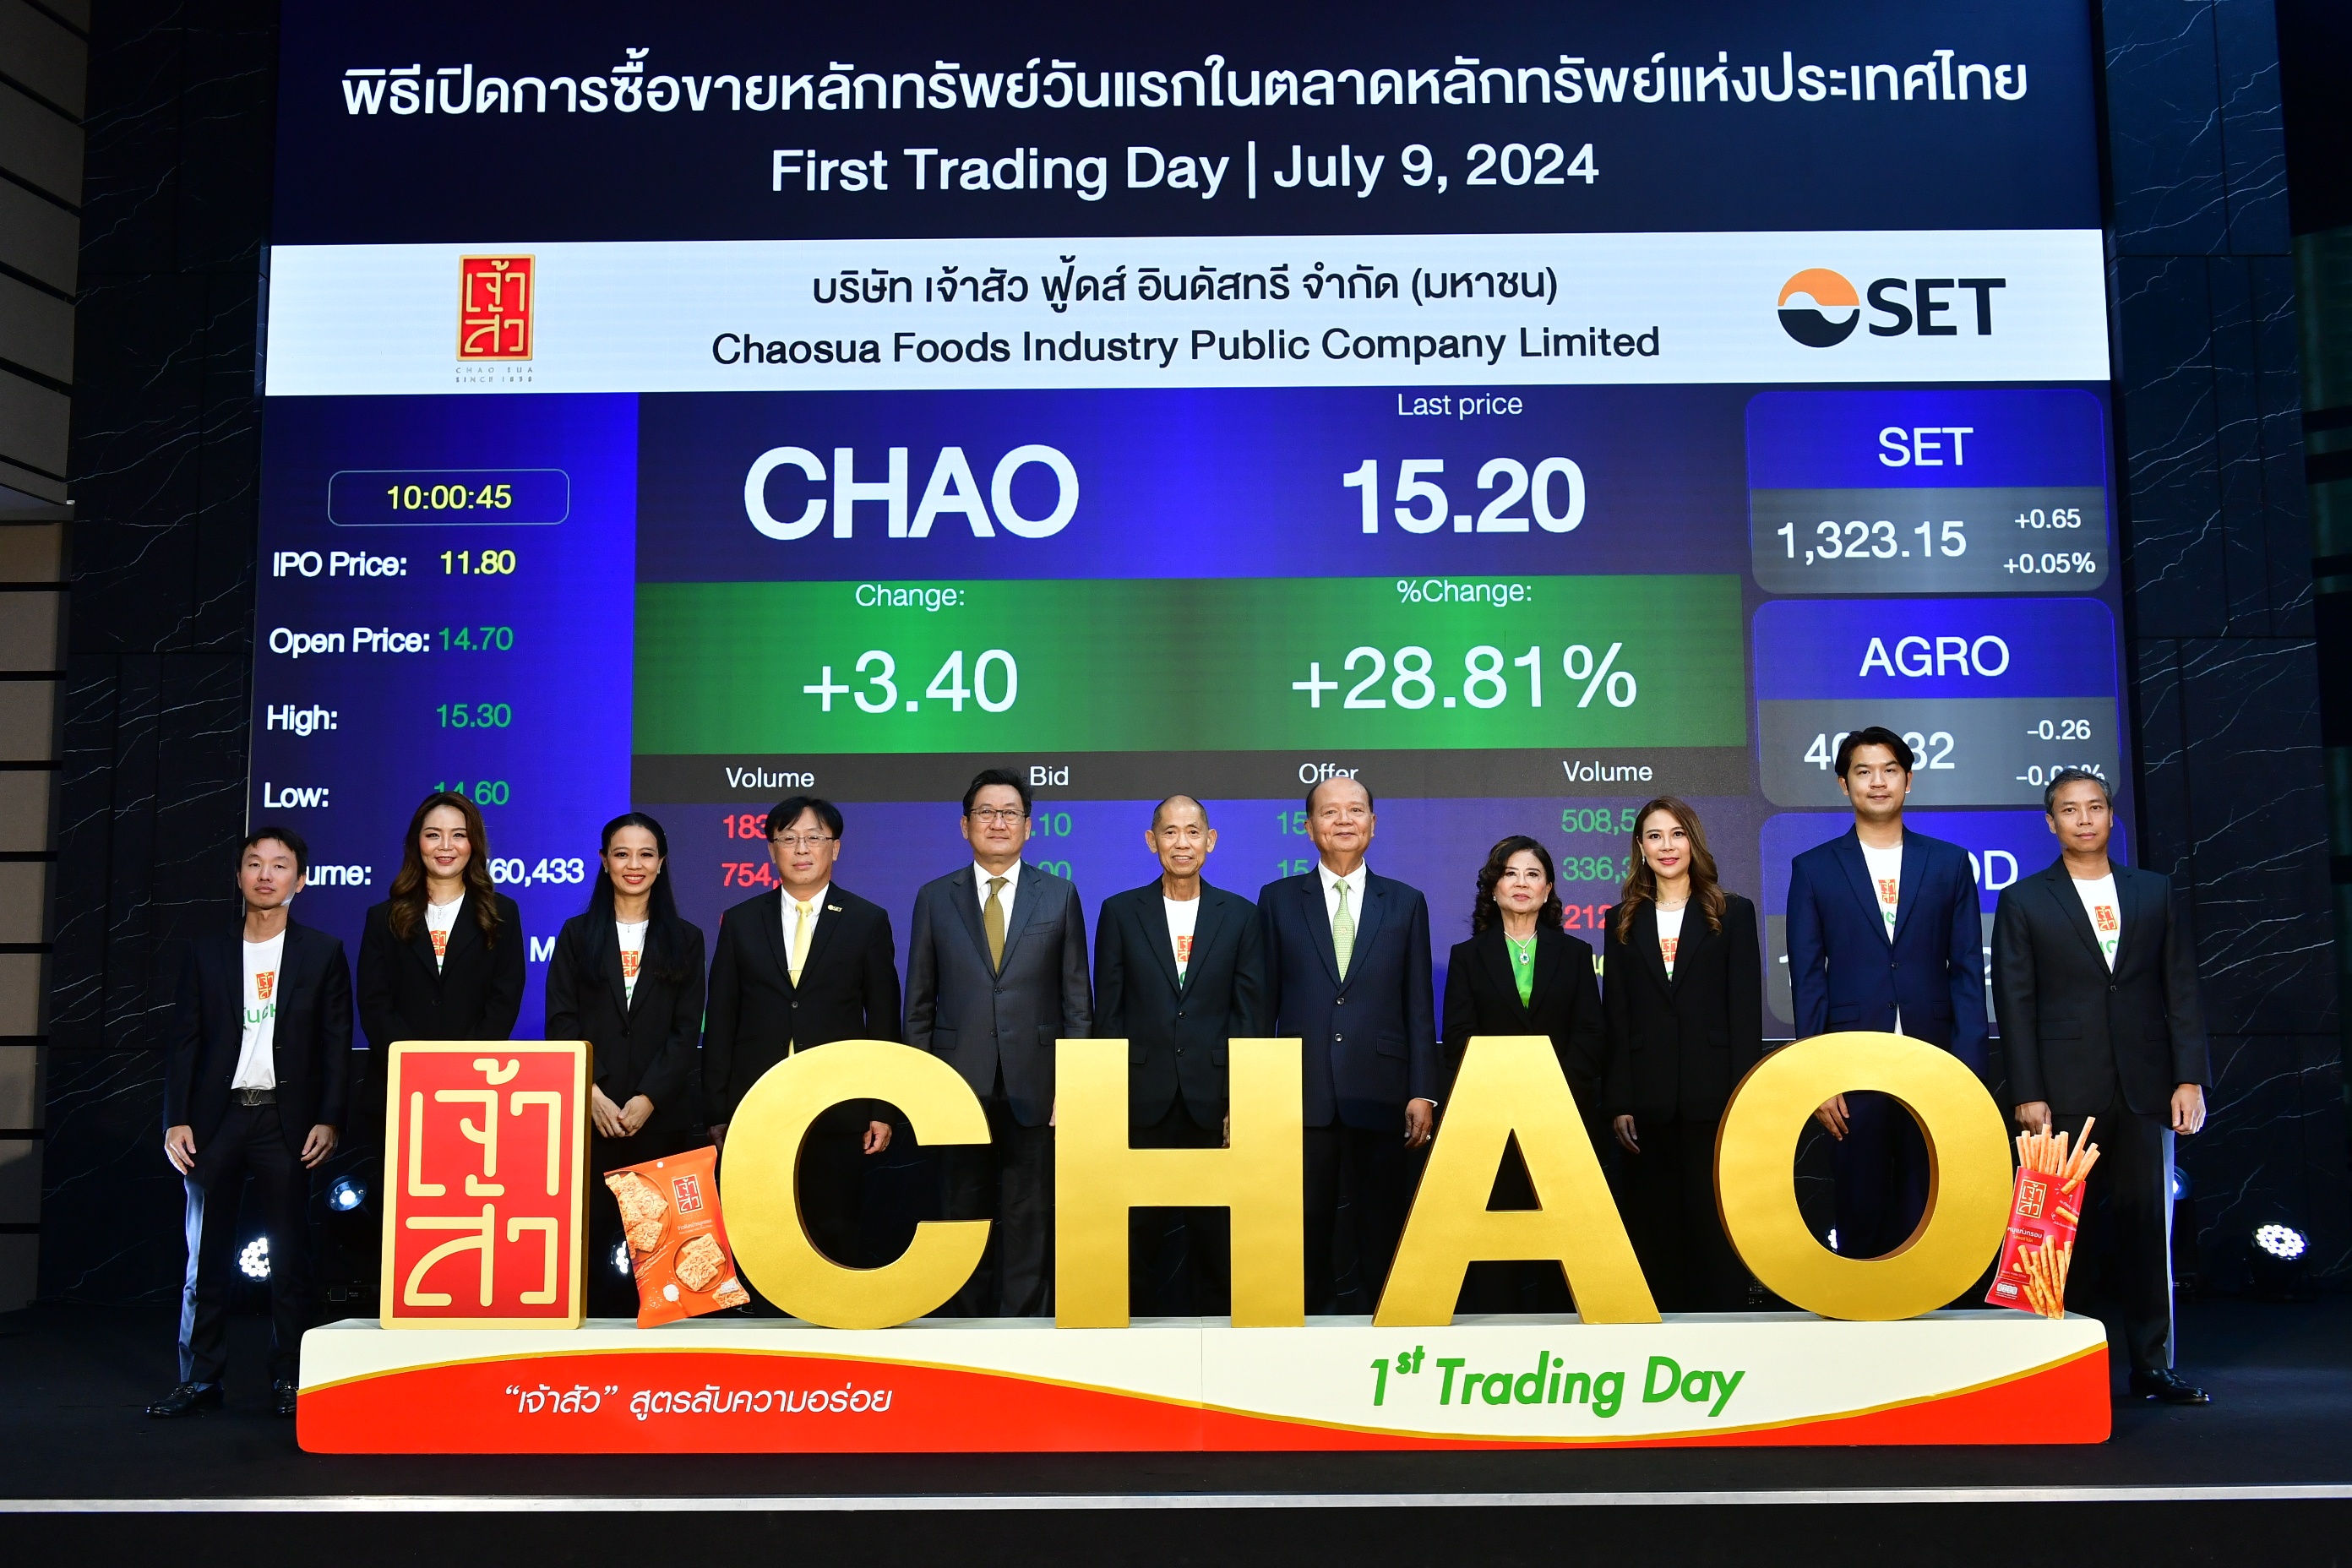 “CHAO” เข้าเทรดวันแรกในตลาดหลักทรัพย์แห่งประเทศไทย ชูศักยภาพผู้นำตลาดขนมขบเคี้ยวไทยรูปแบบใหม่ (Modern Thai Snack) ปักธงพาแบรนด์ไทยเติบโตสู่ตลาดระดับ Global